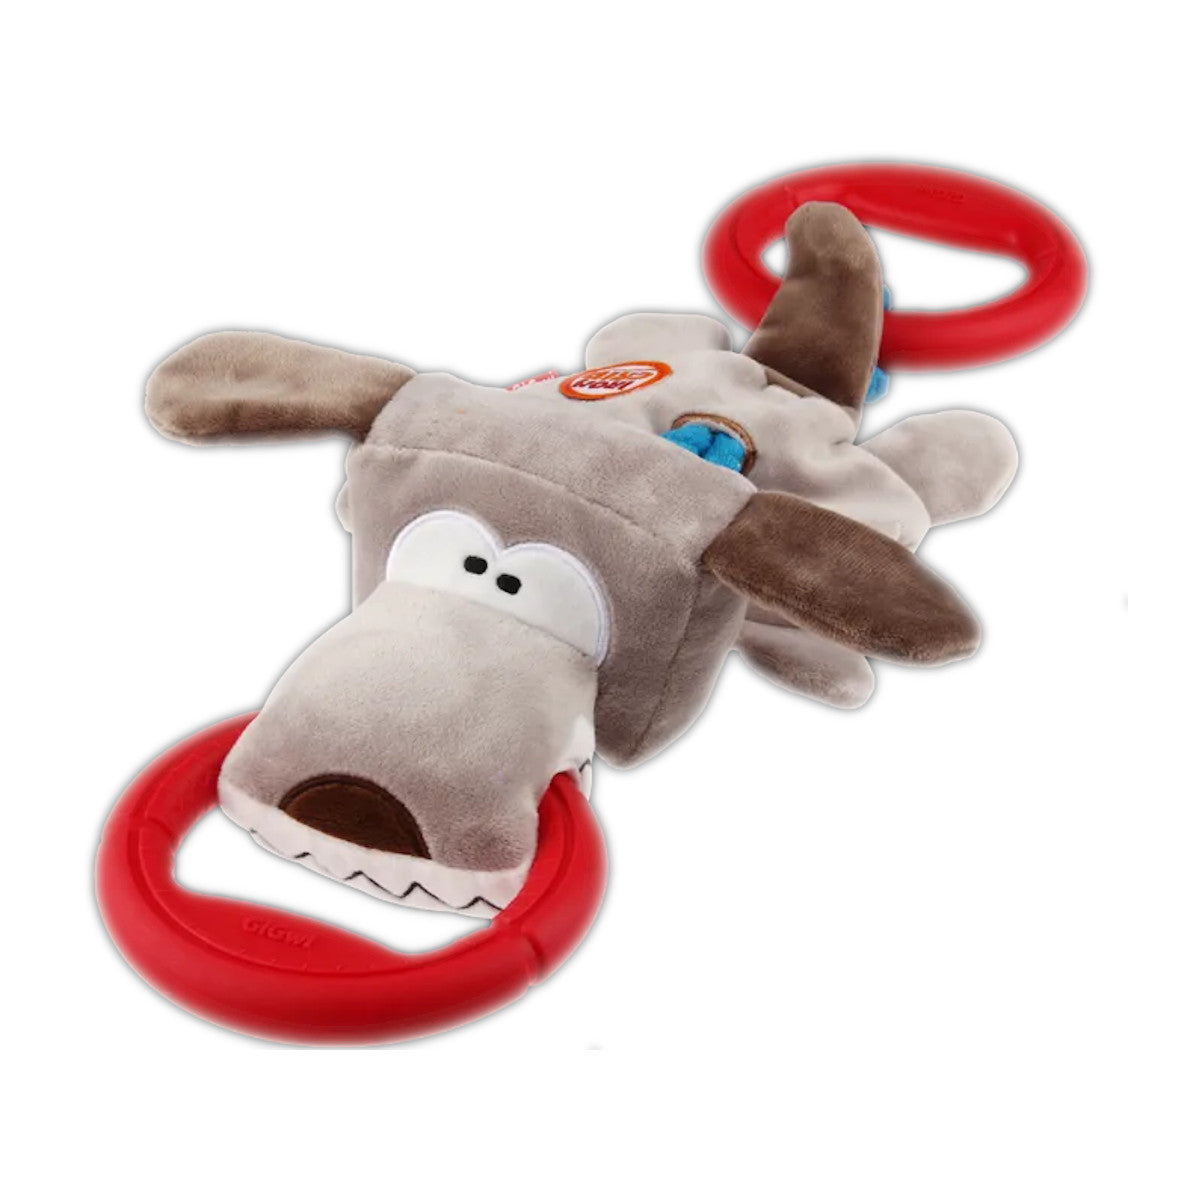 Gigwi Iron Grip Plush Tug Dog Toy with Squeaker